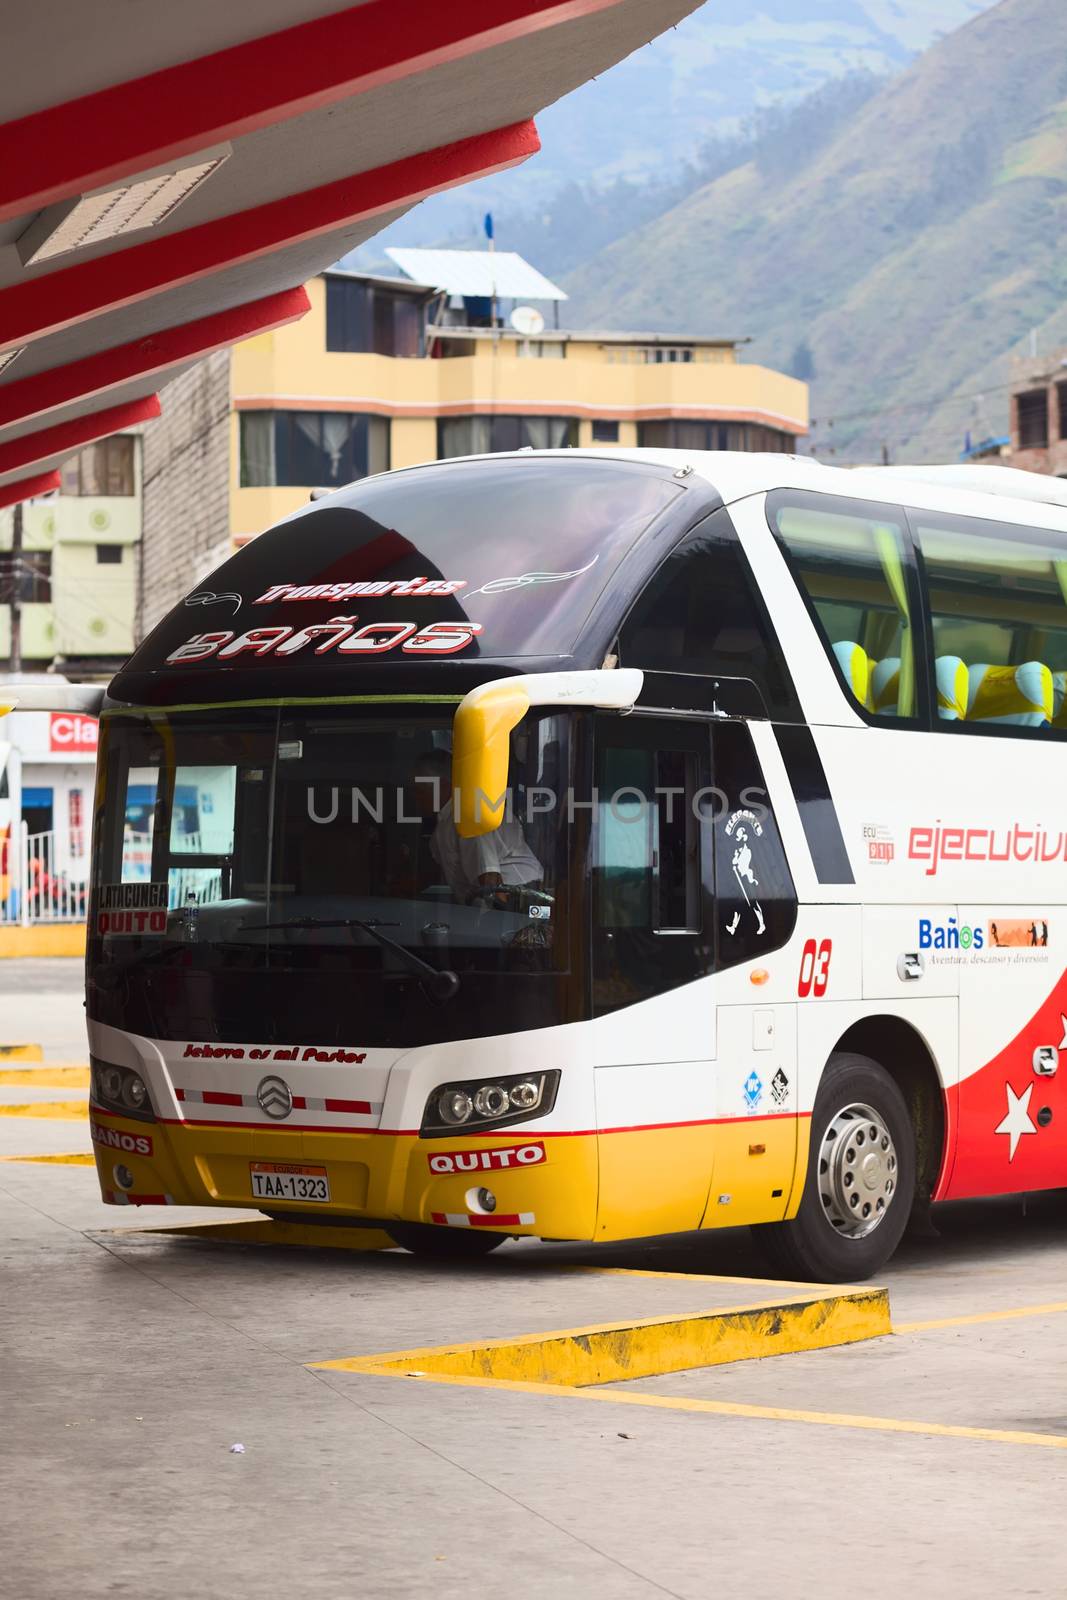 BANOS, ECUADOR - FEBRUARY 22, 2014: Unidentified person in a standing bus in the bus terminal on February 22, 2014 in Banos, Ecuador. 